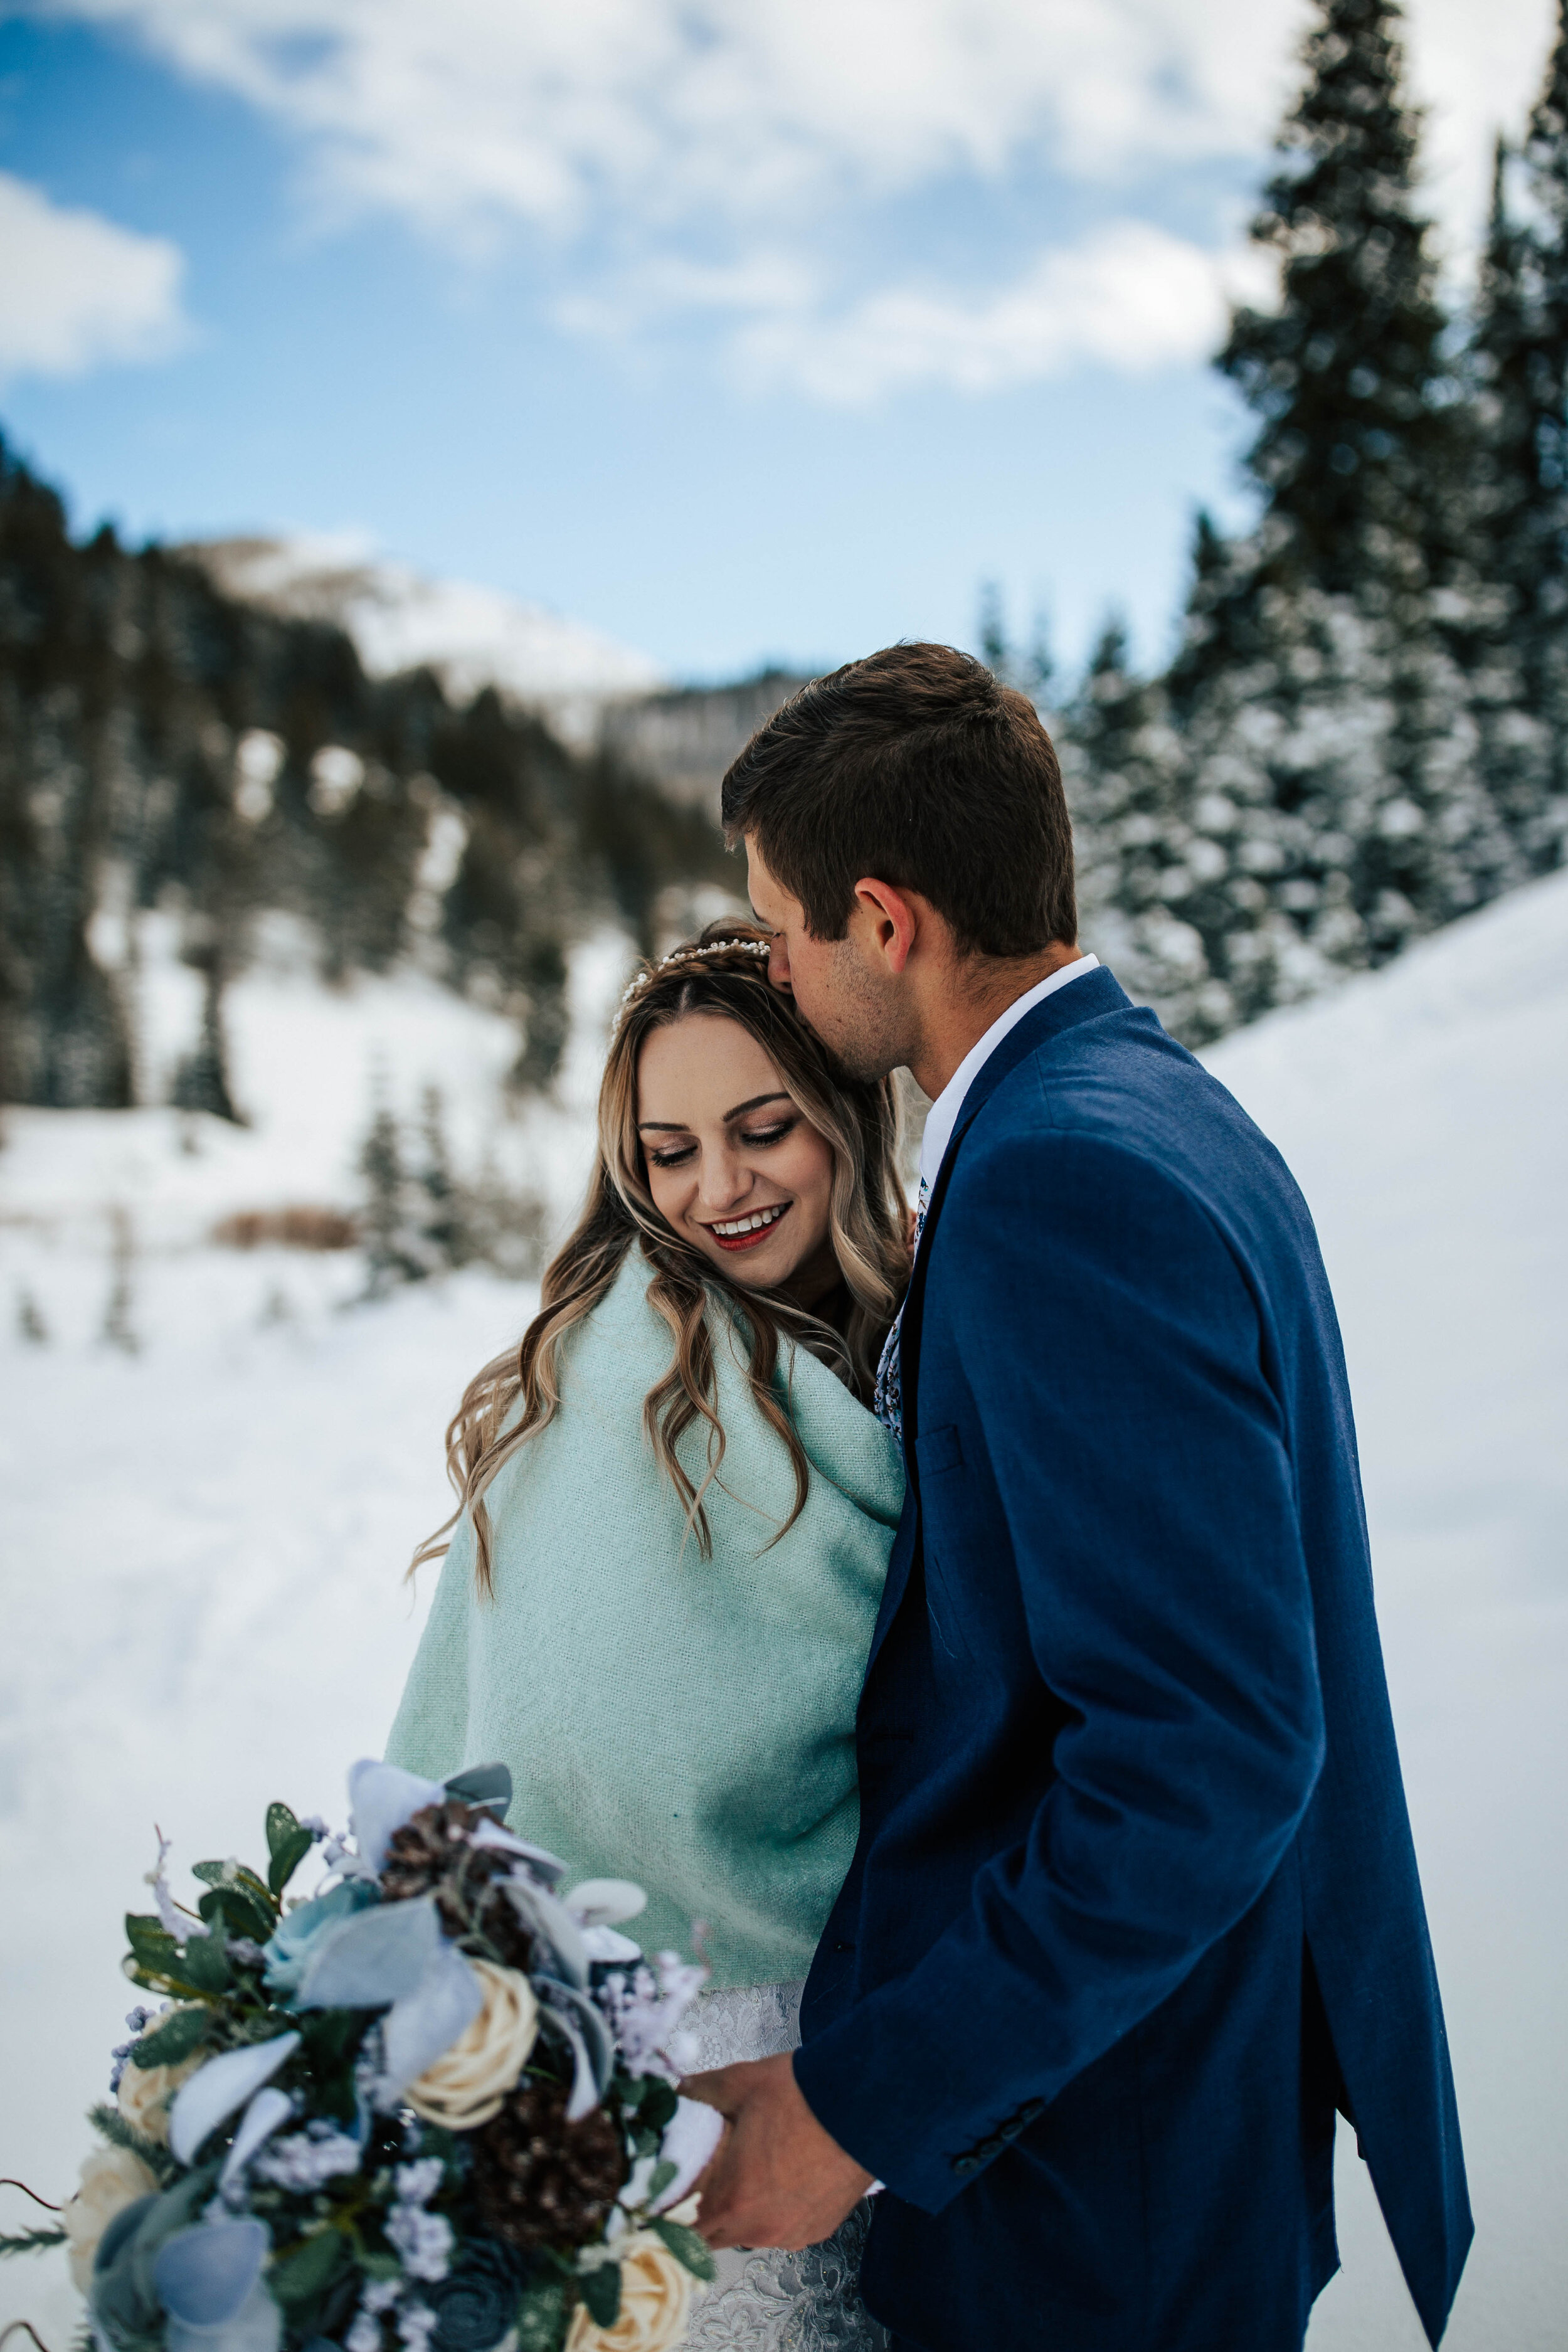 Wedding couple winter wedding bridals snow #winterwedding #weddingphotographer #bridals #bridalshoot #coupleshoot photoshoot